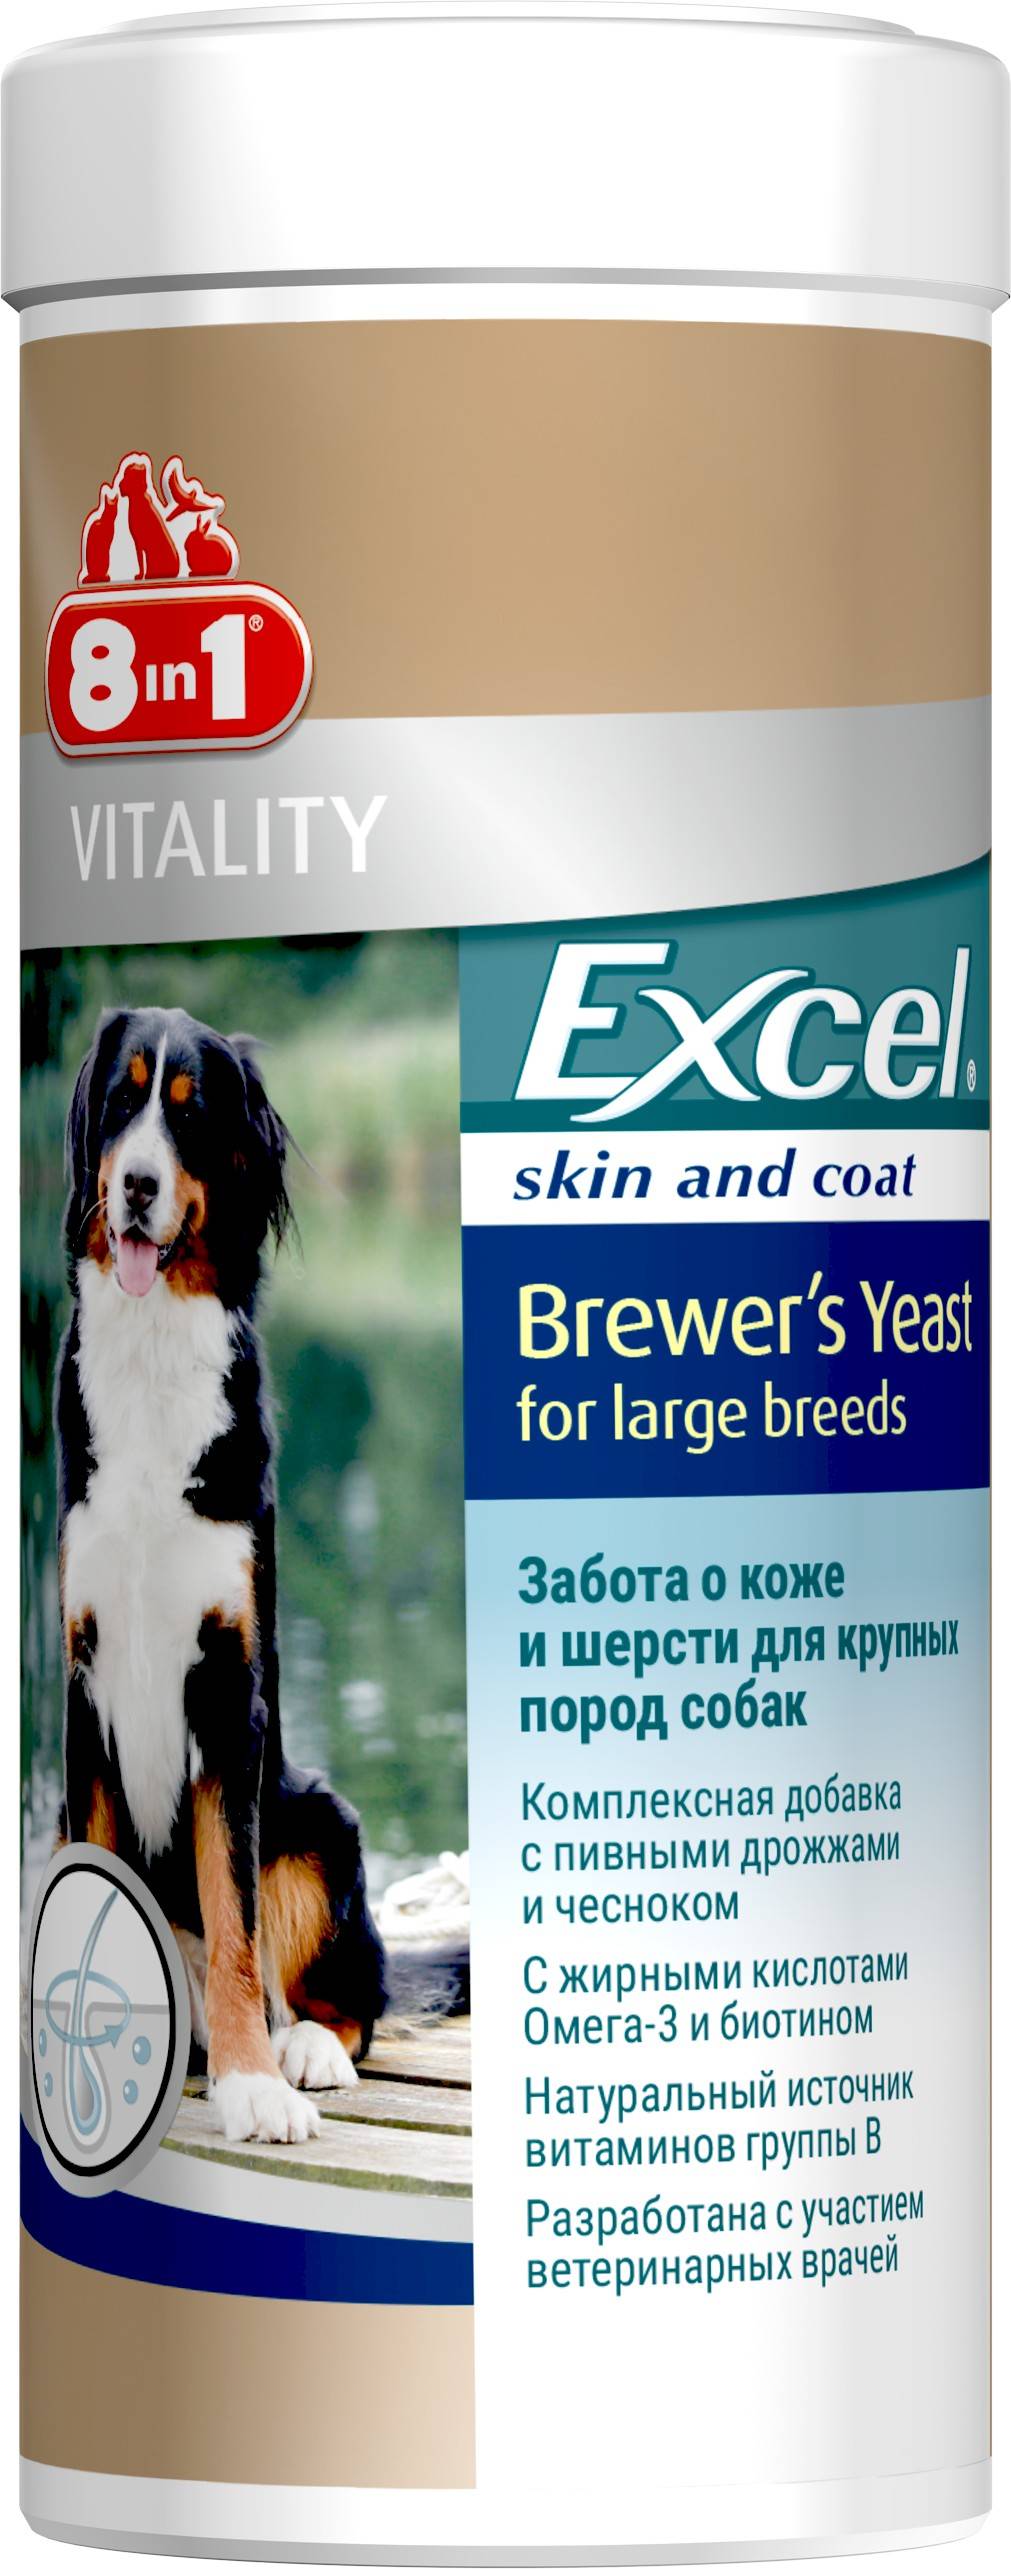 8in1 Brewer's Yeast For Large Breeds – пивные дрожжи для собак больших пород